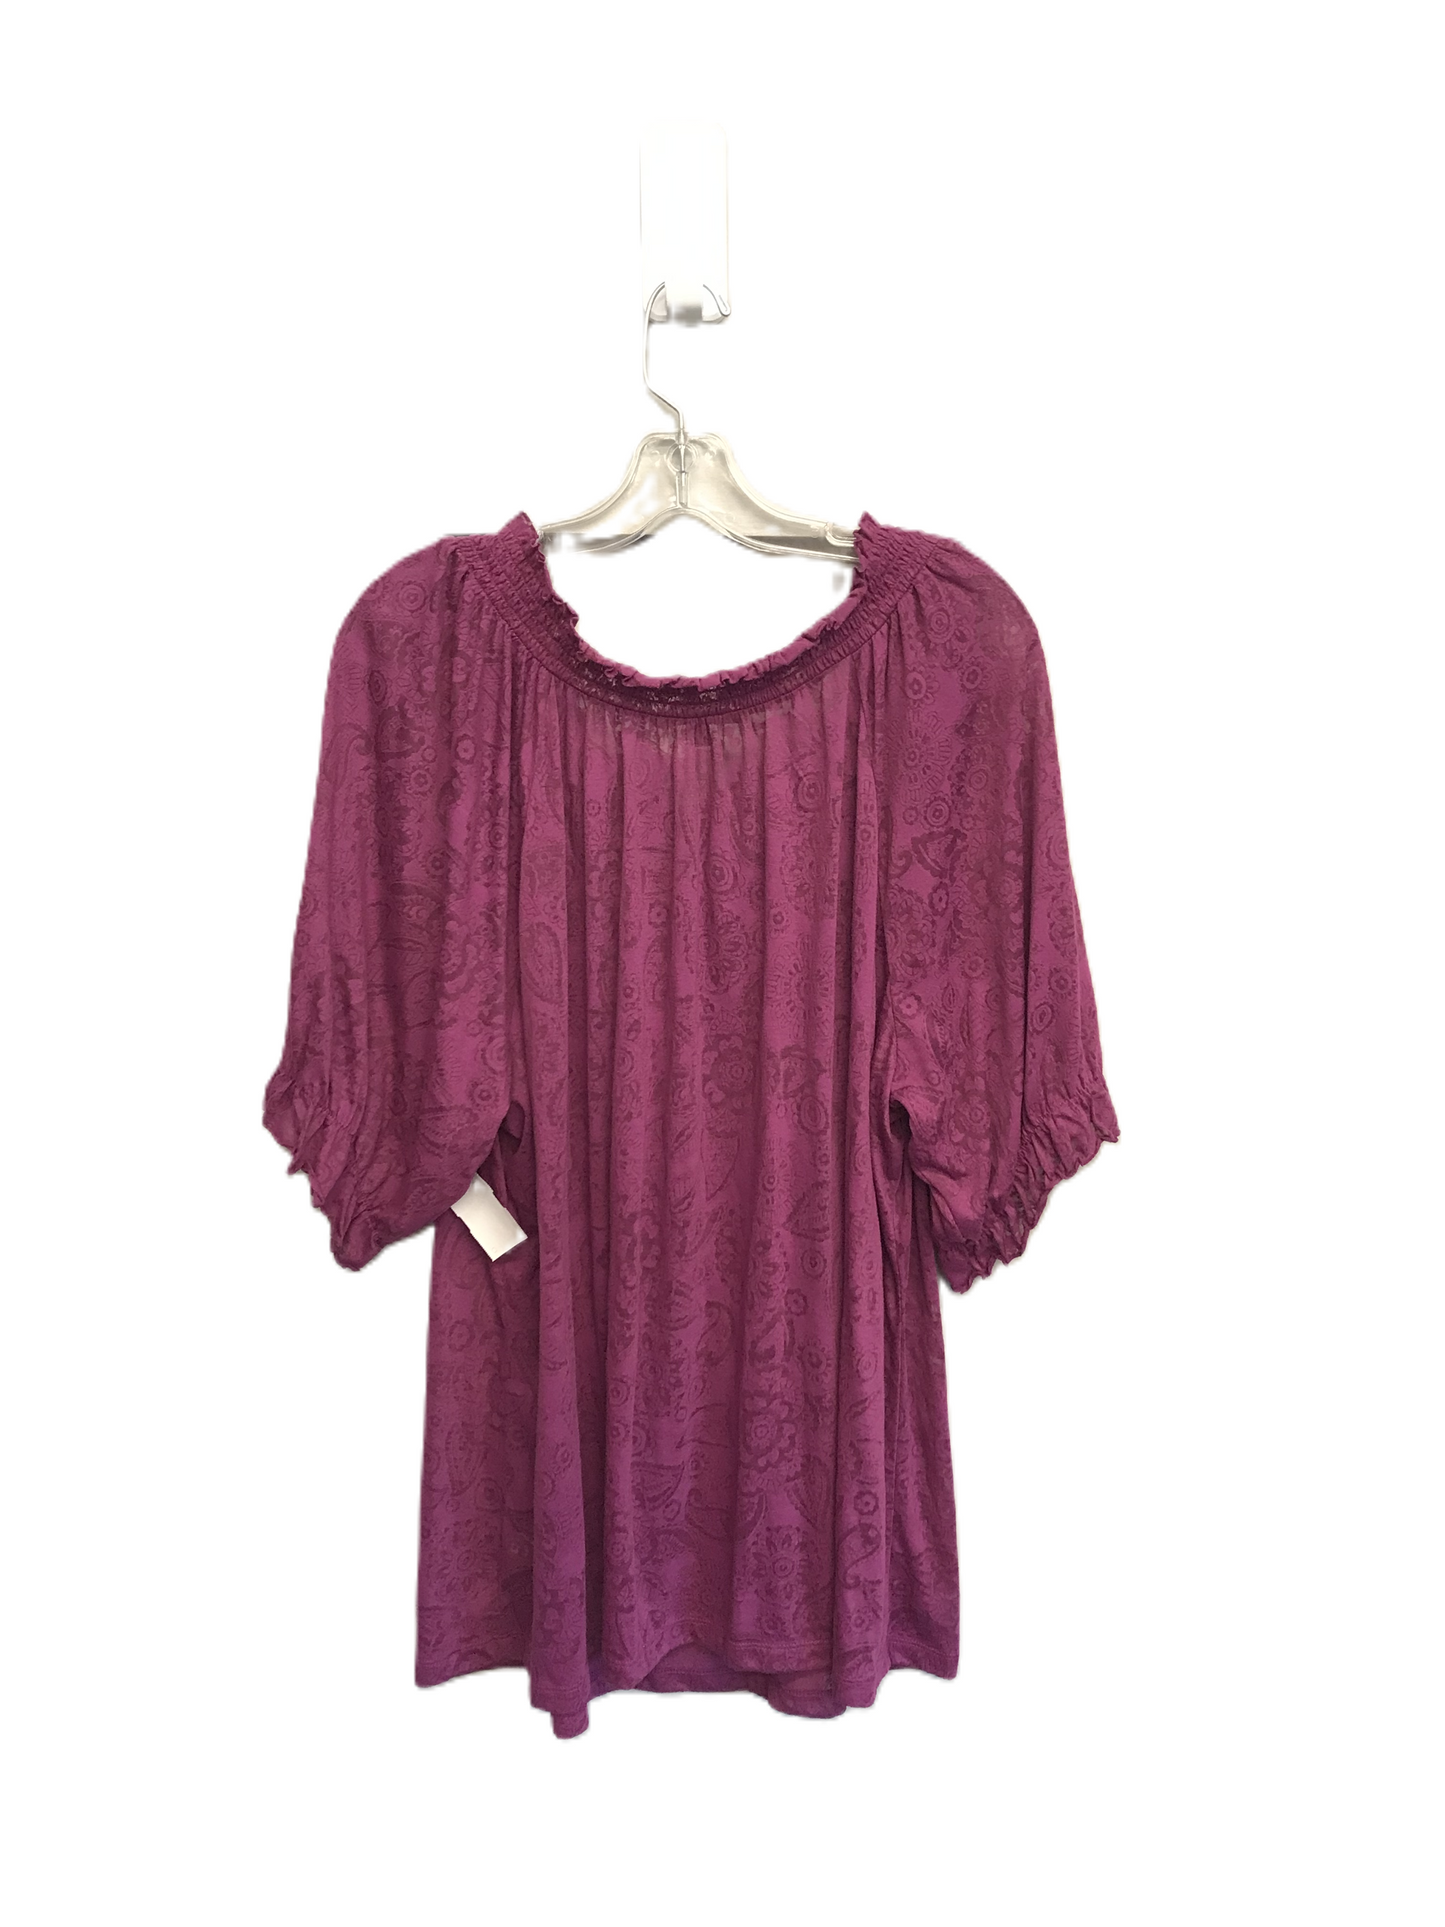 Purple Top Short Sleeve By Saint Tropez, Size: 3x